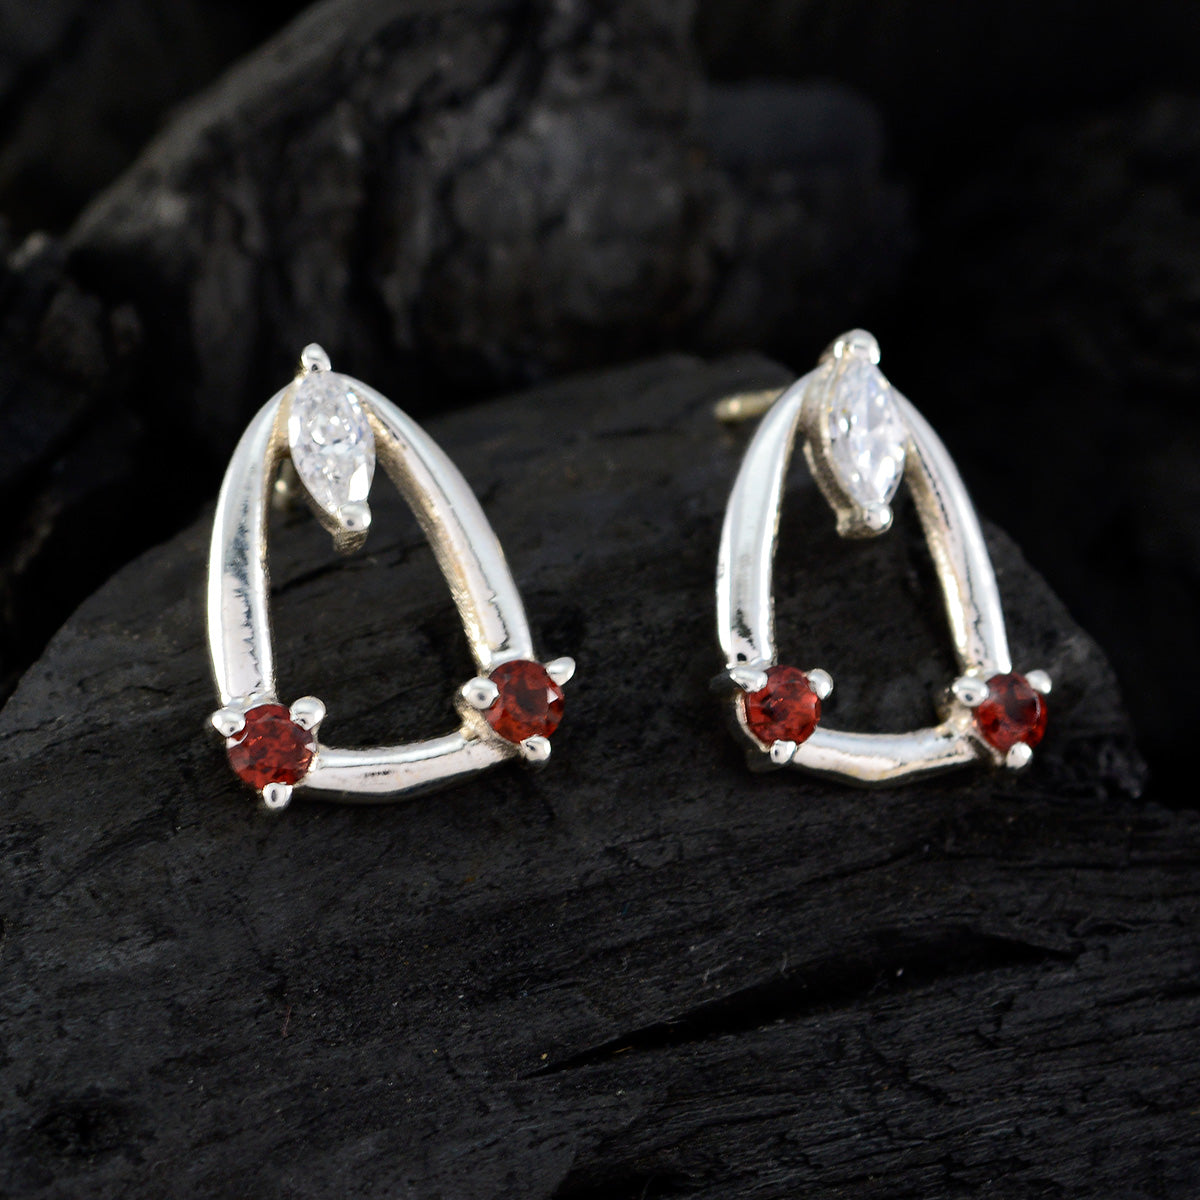 Riyo Nice Gemstone multi shape Faceted Red Garnet Silver Earring gift for st. patricks day